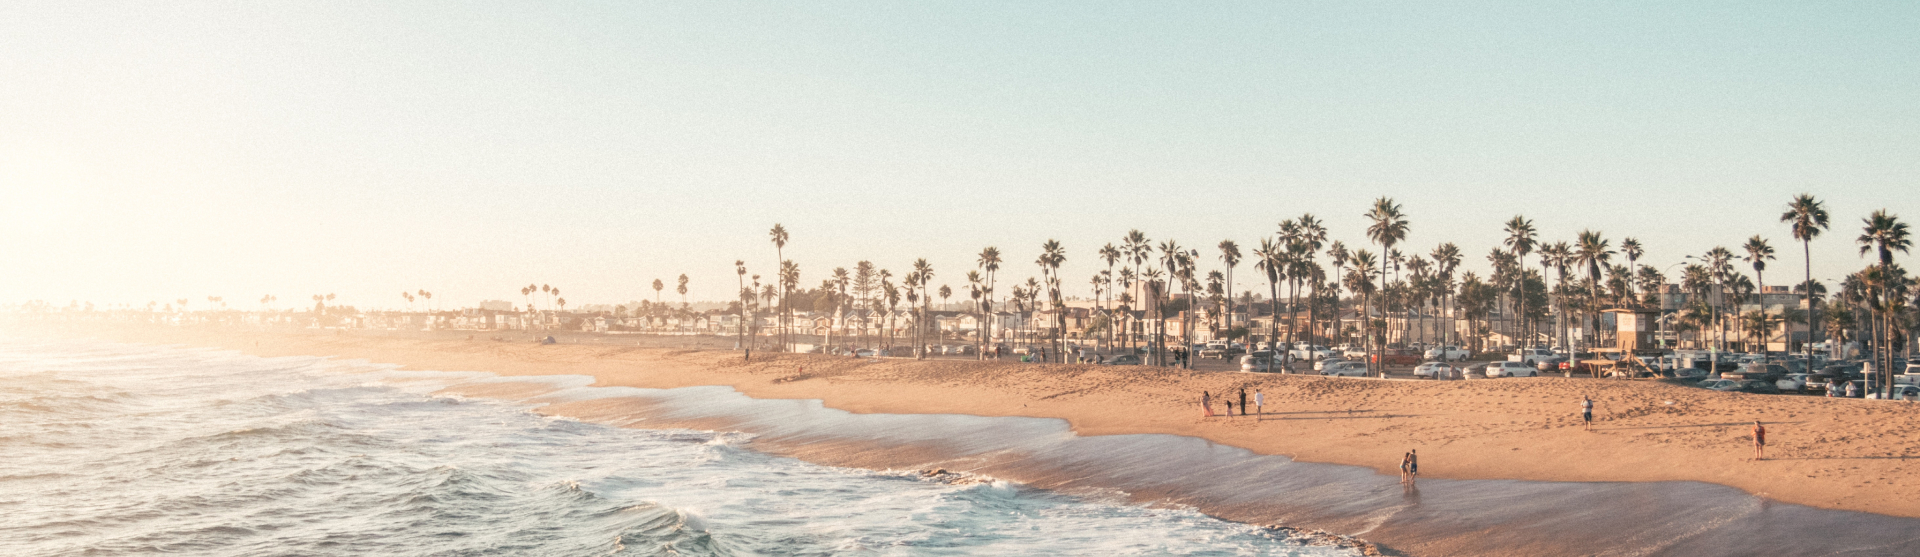 A beautiful image of a beach in Irvine, California